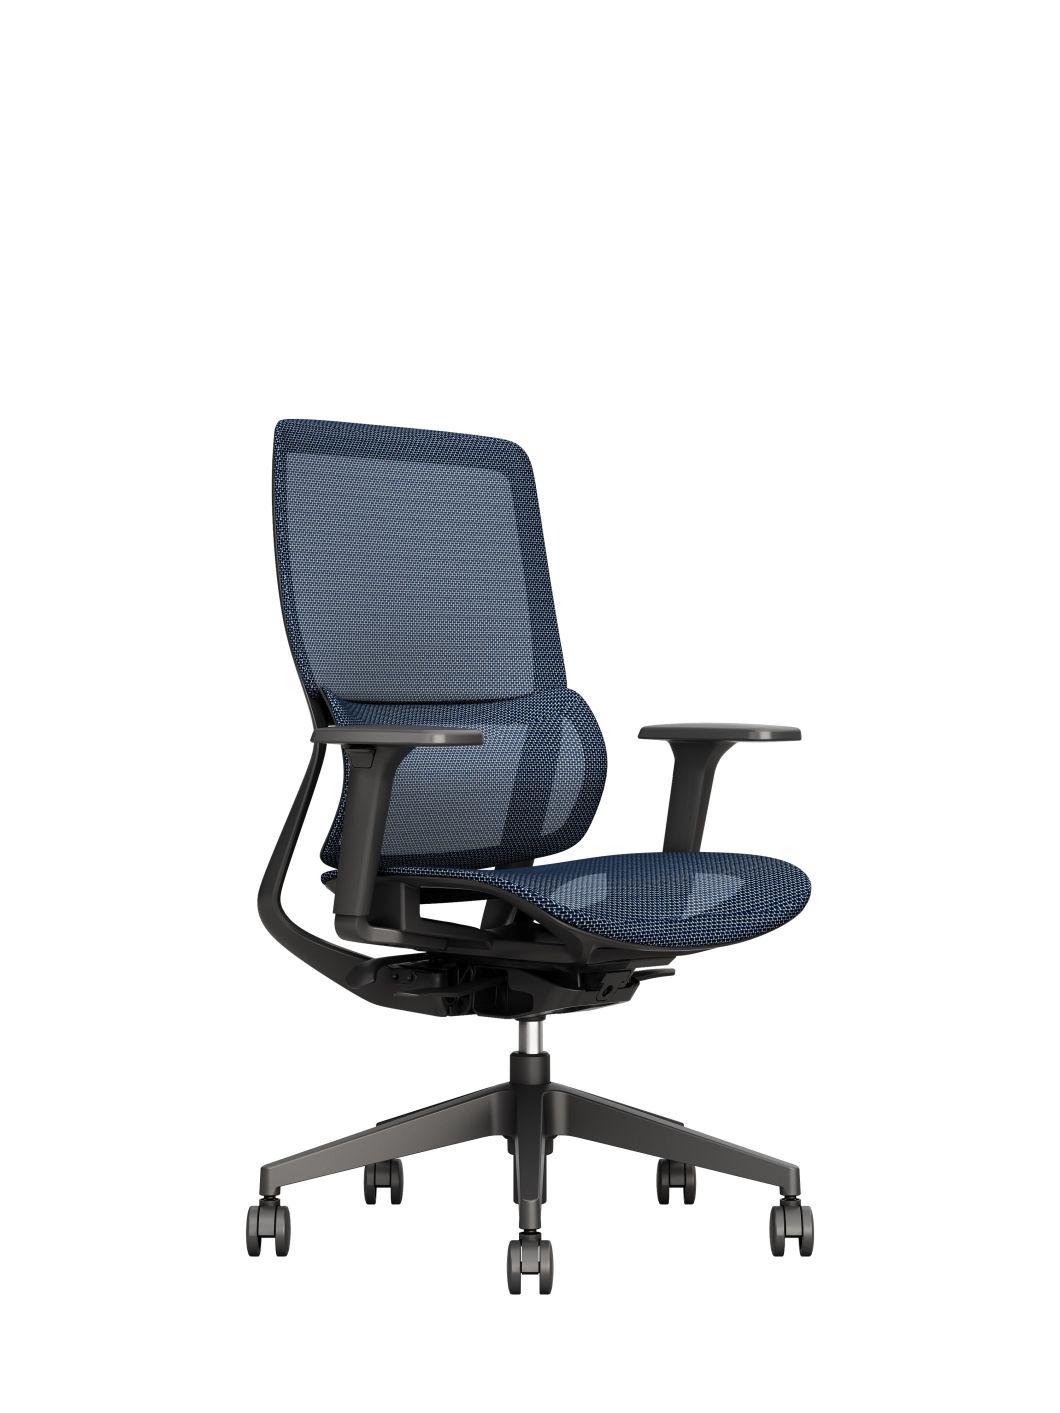 Swing Back New Design Ergonomic Chair Office Use